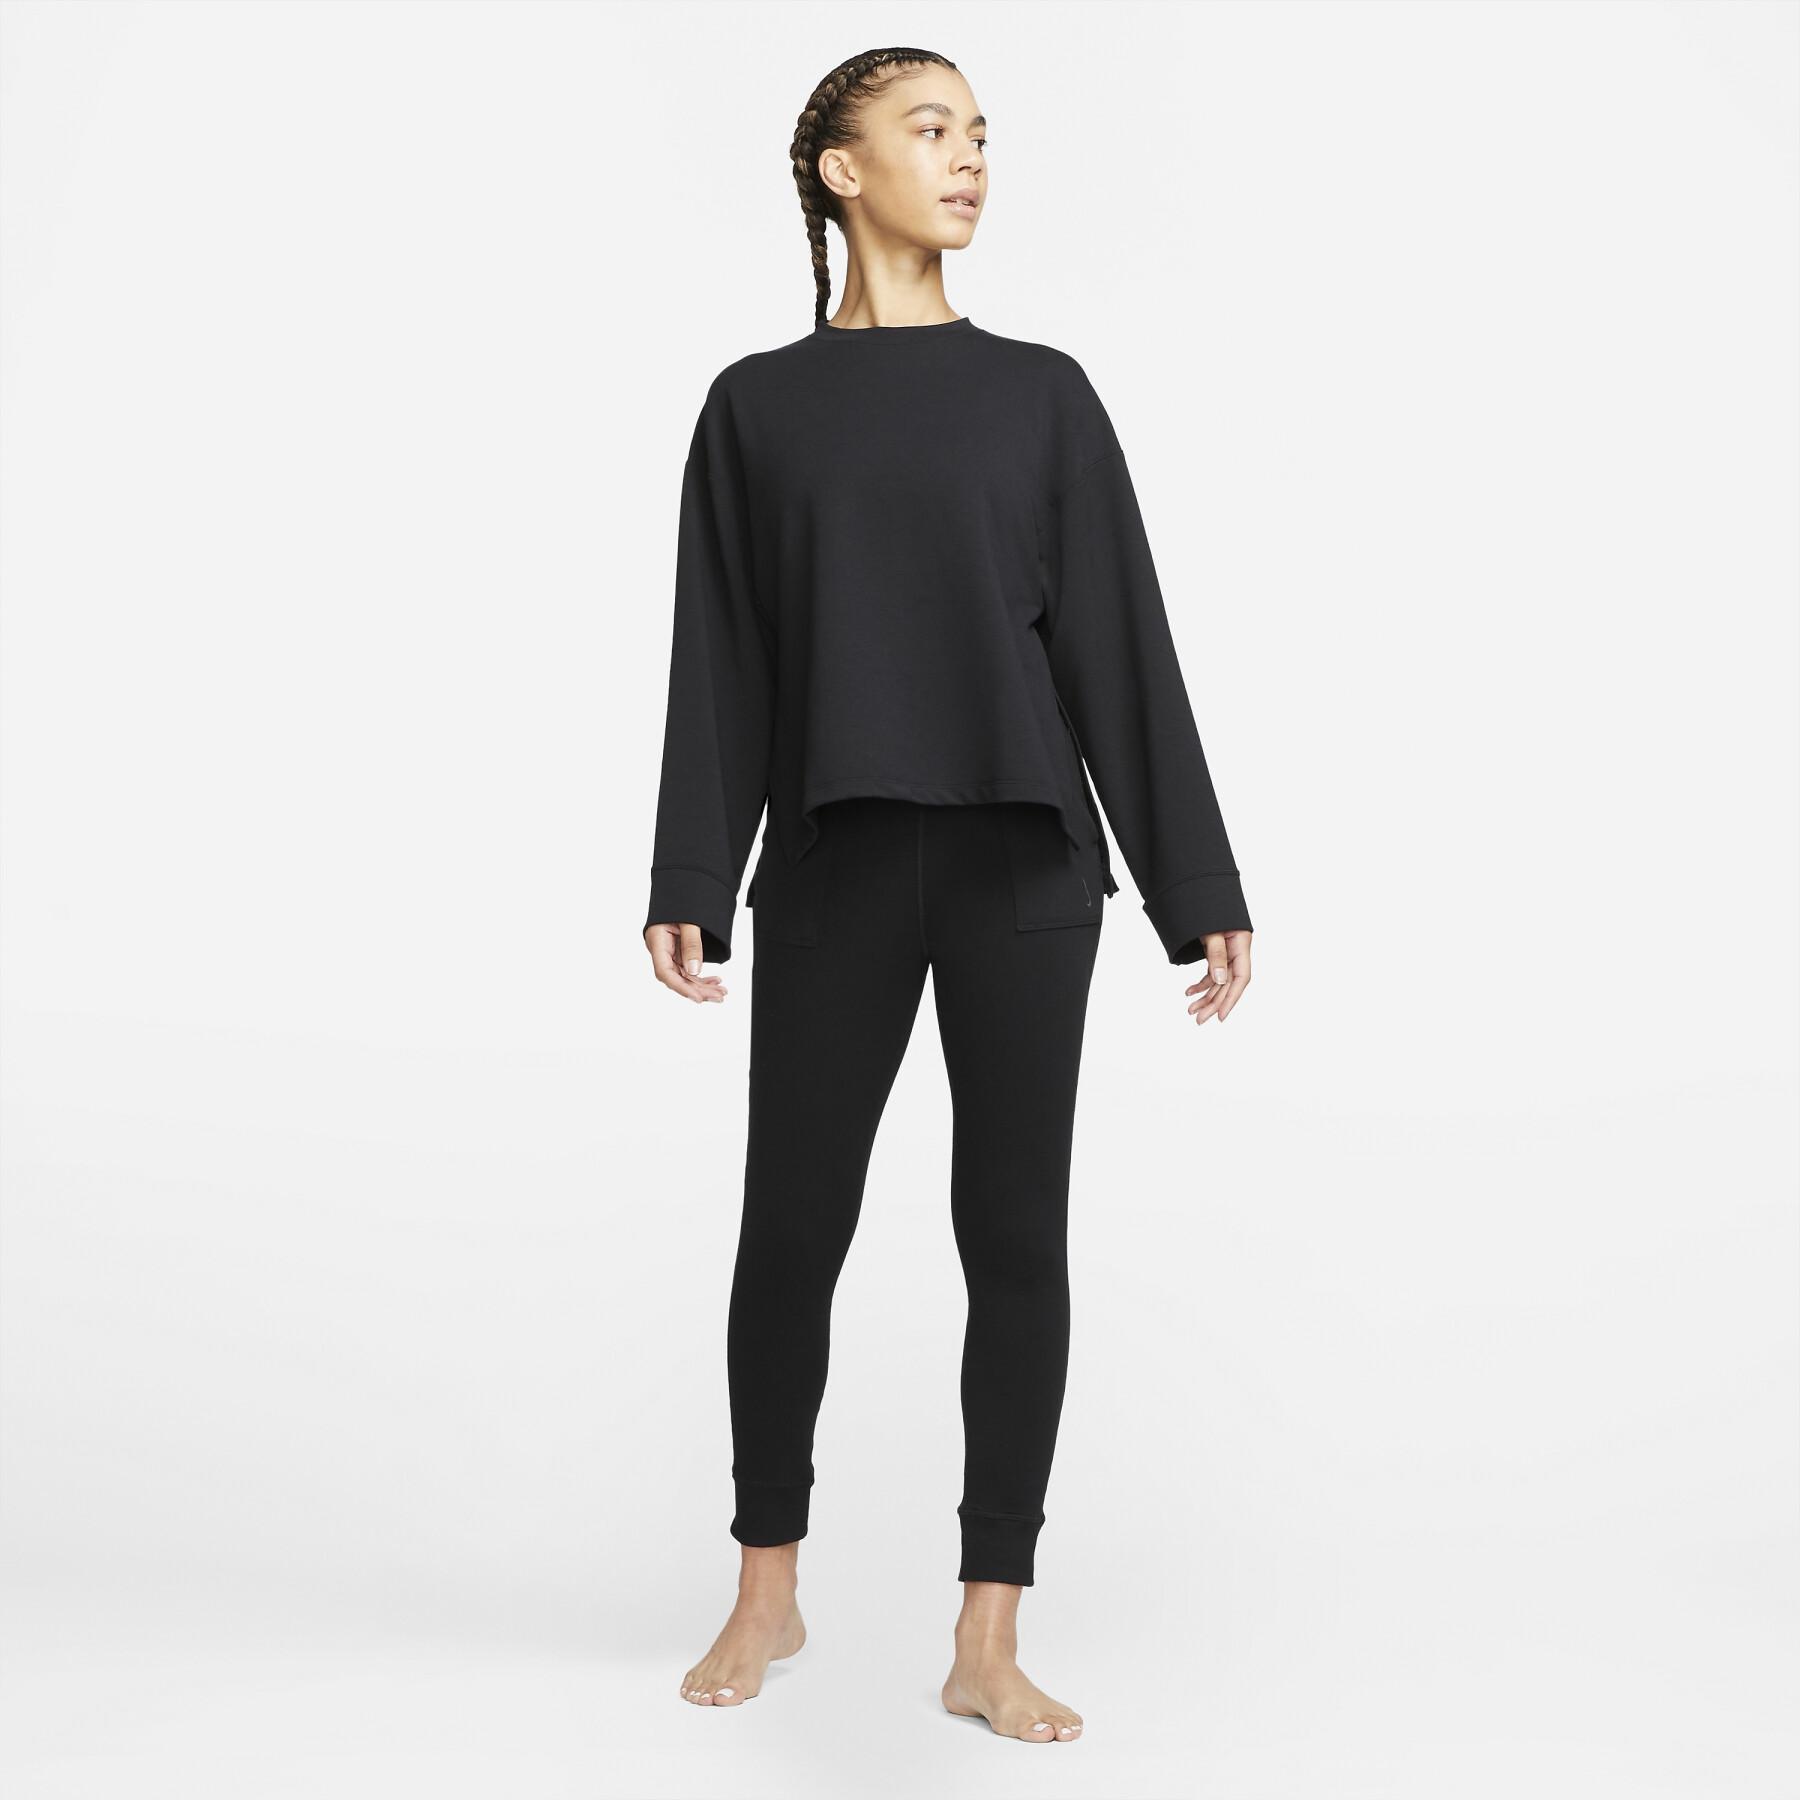 Sweatshirt round neck woman Nike Dri-Fit FLC - Women's clothing - Fitness